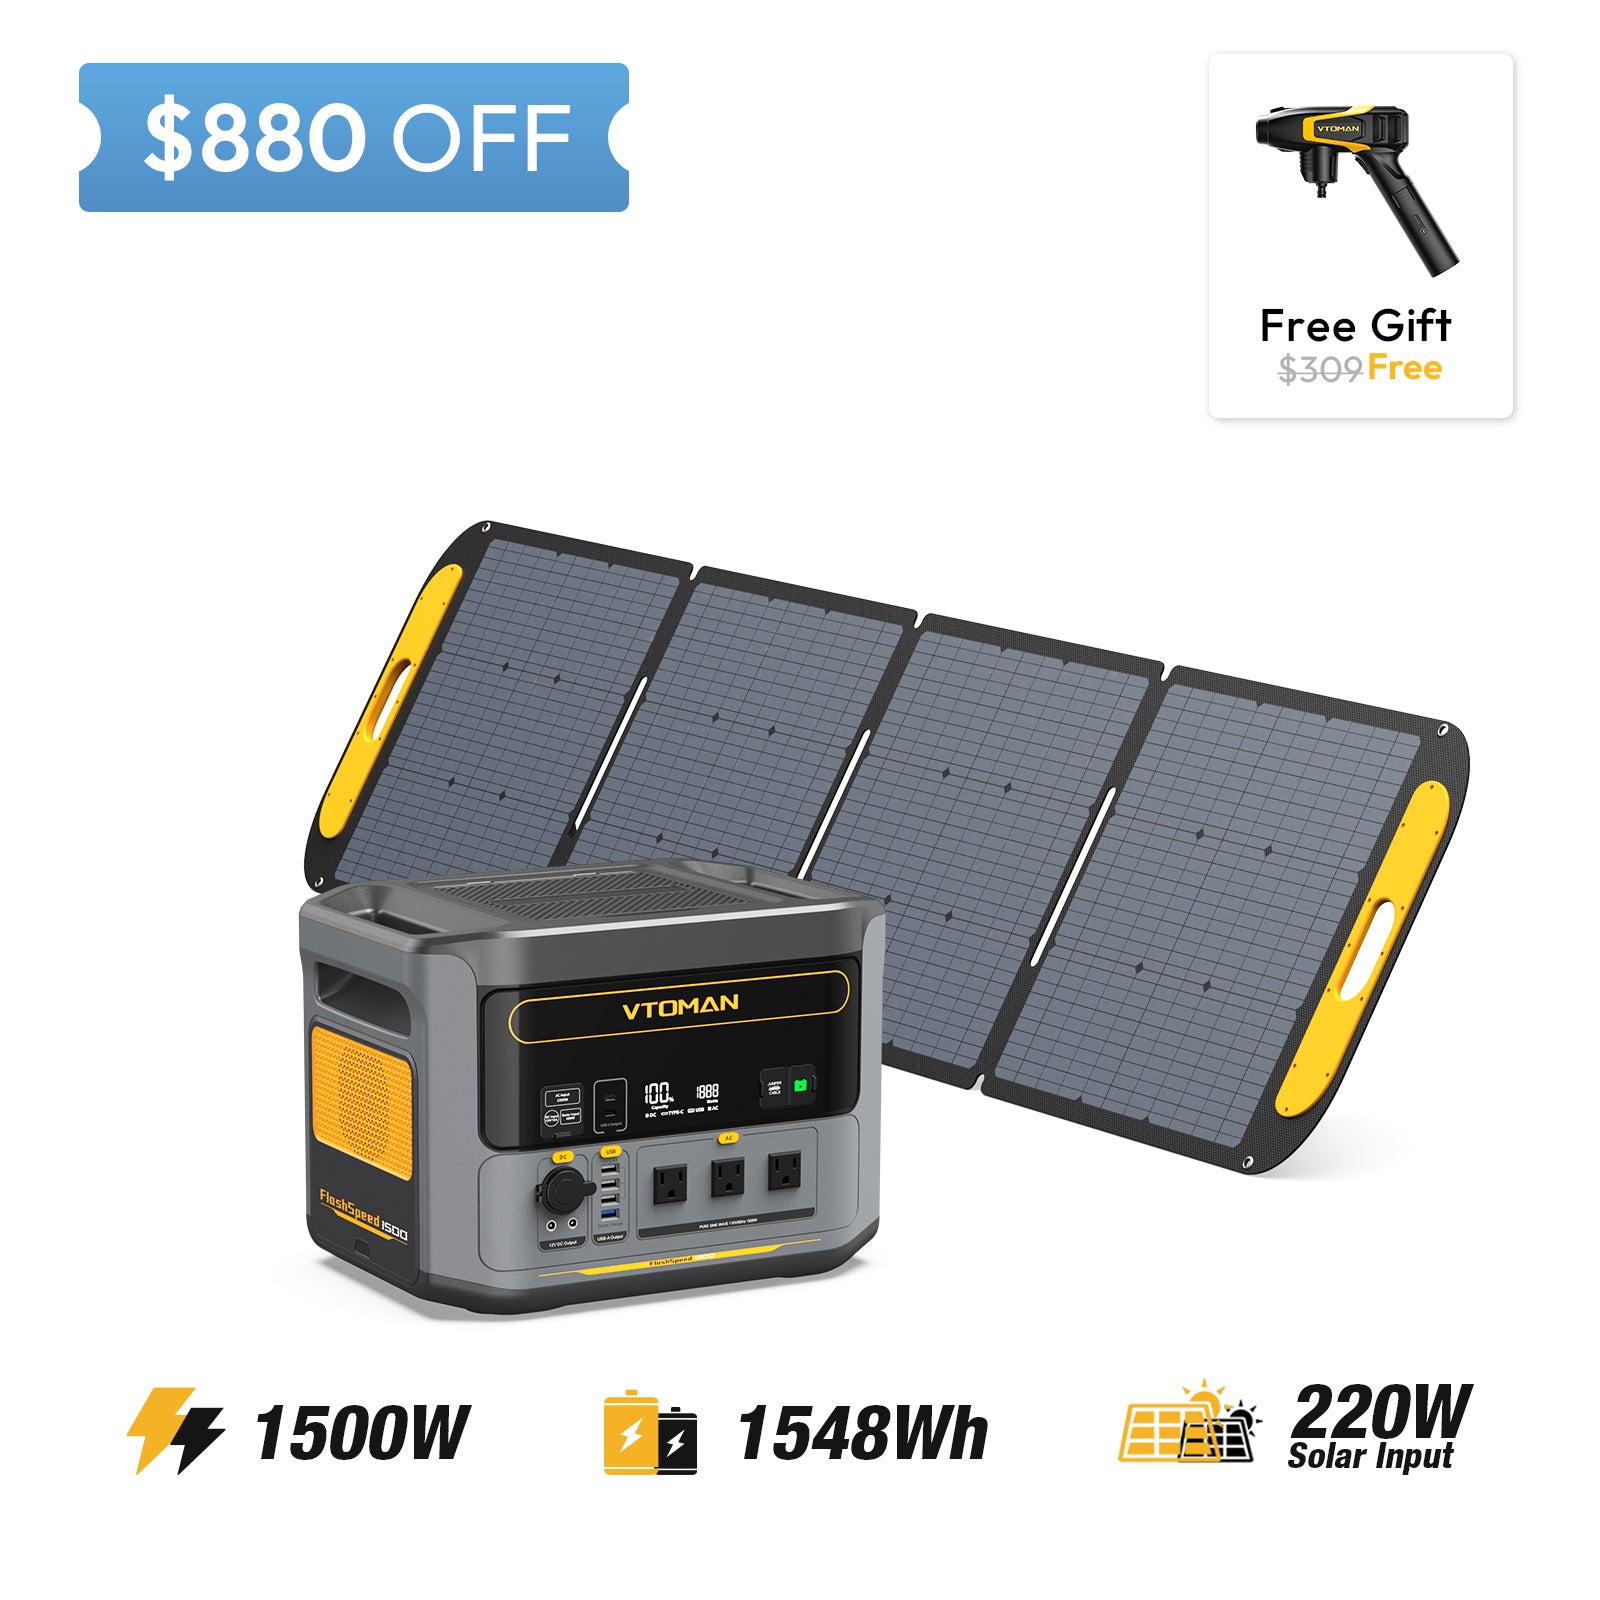 FlashSpeed 1500W/1548Wh 220W Solar Panel